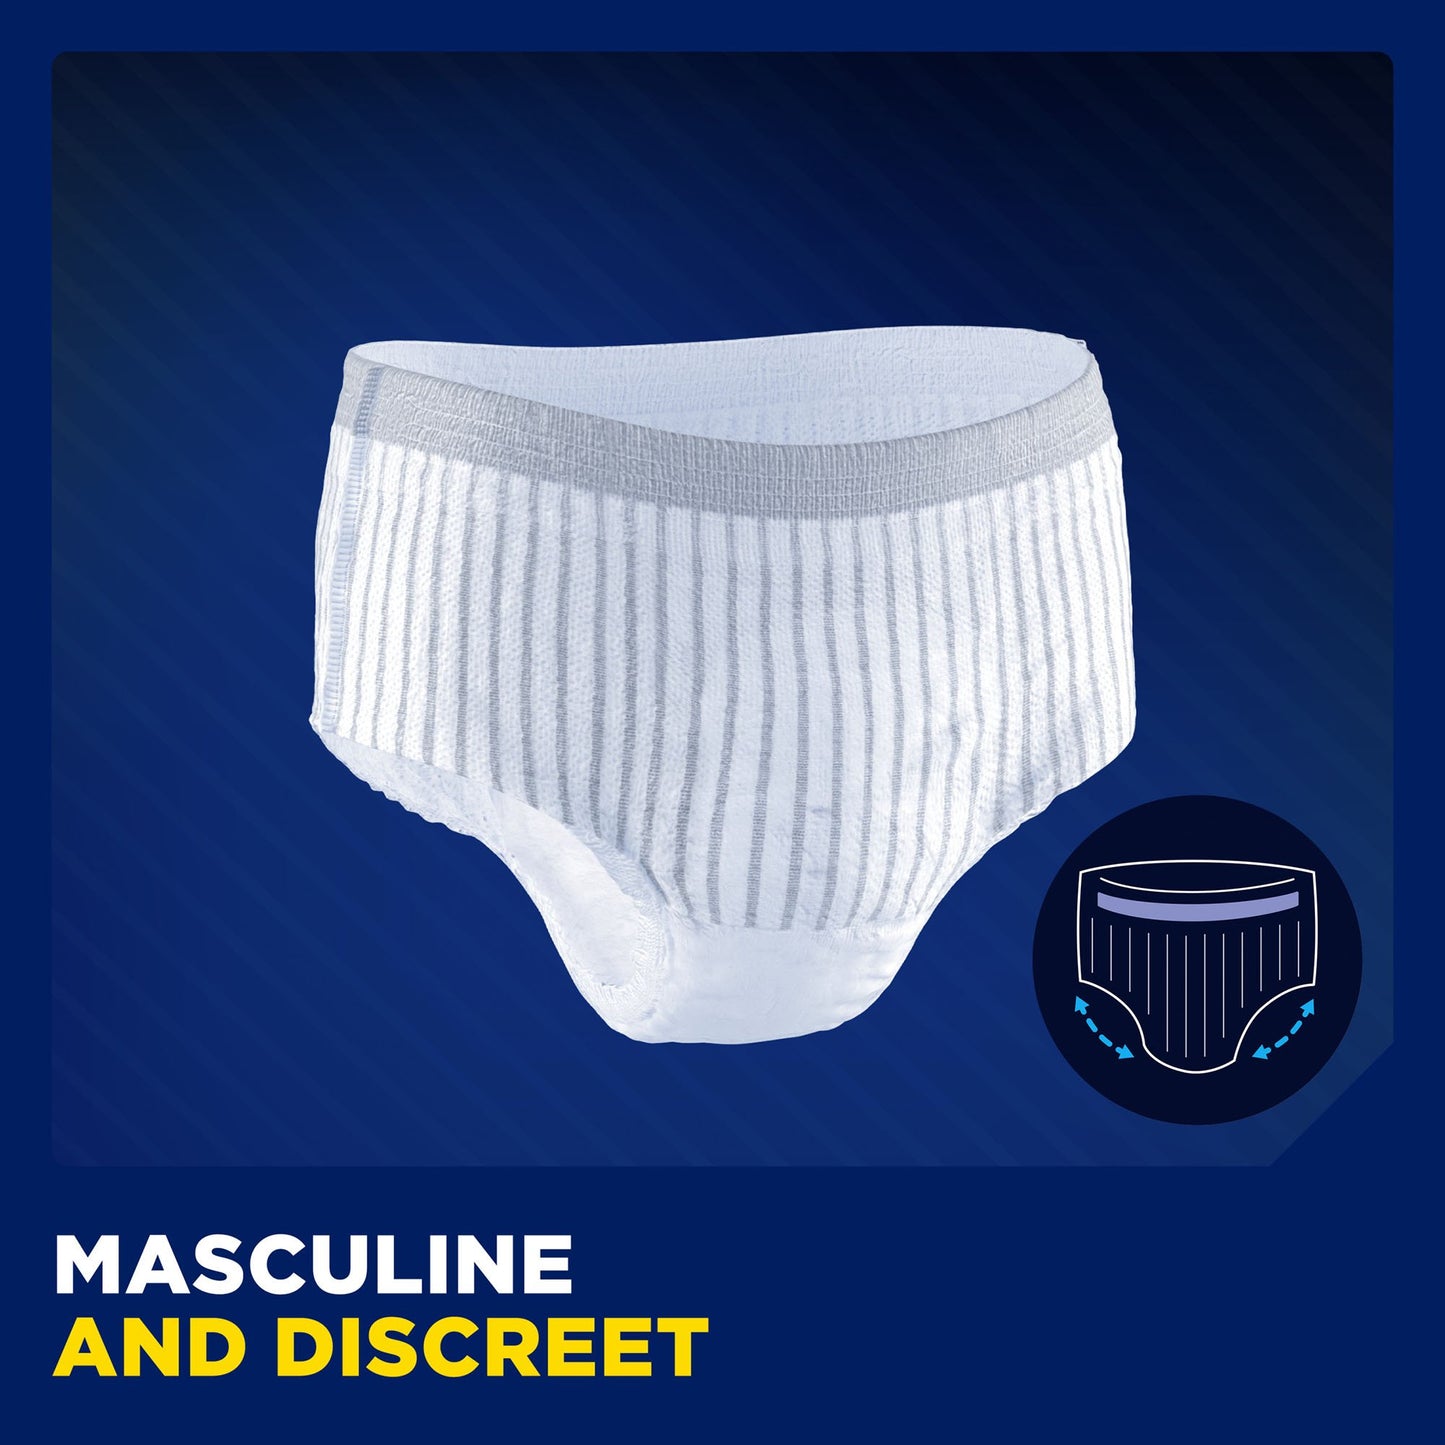 Tena® Men™ Super Plus Absorbent Underwear, XL, 14 ct